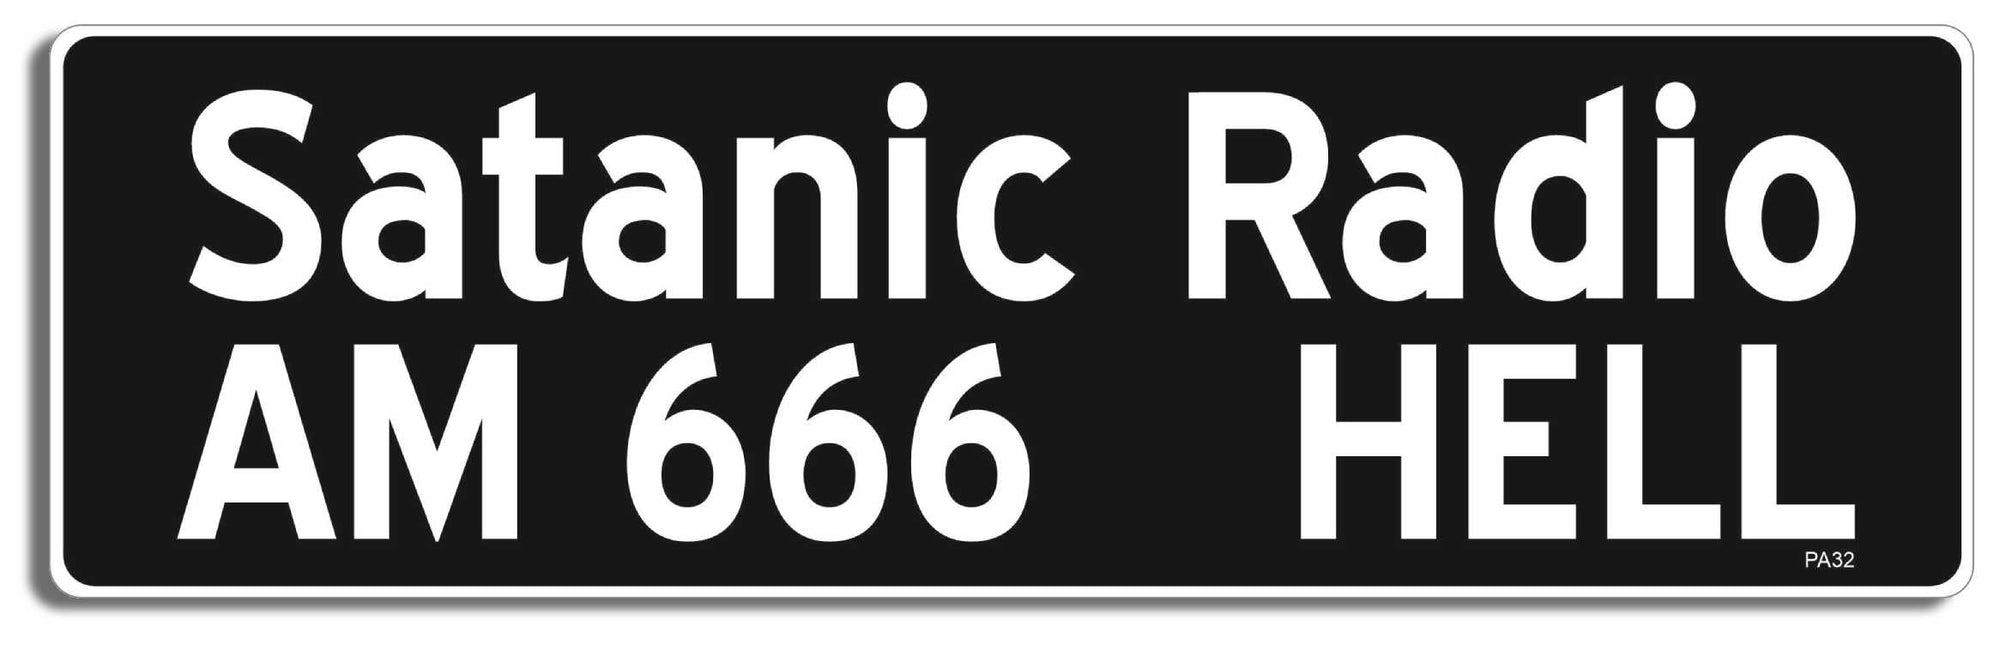 Satanic Radio AM 666 HELL -  3" x 10" Bumper Sticker--Car Magnet- -  Decal Bumper Sticker-pagan Bumper Sticker Car Magnet Satanic Radio AM 666 HELL-   Decal for carsatheist, pagan, wiccan, witch